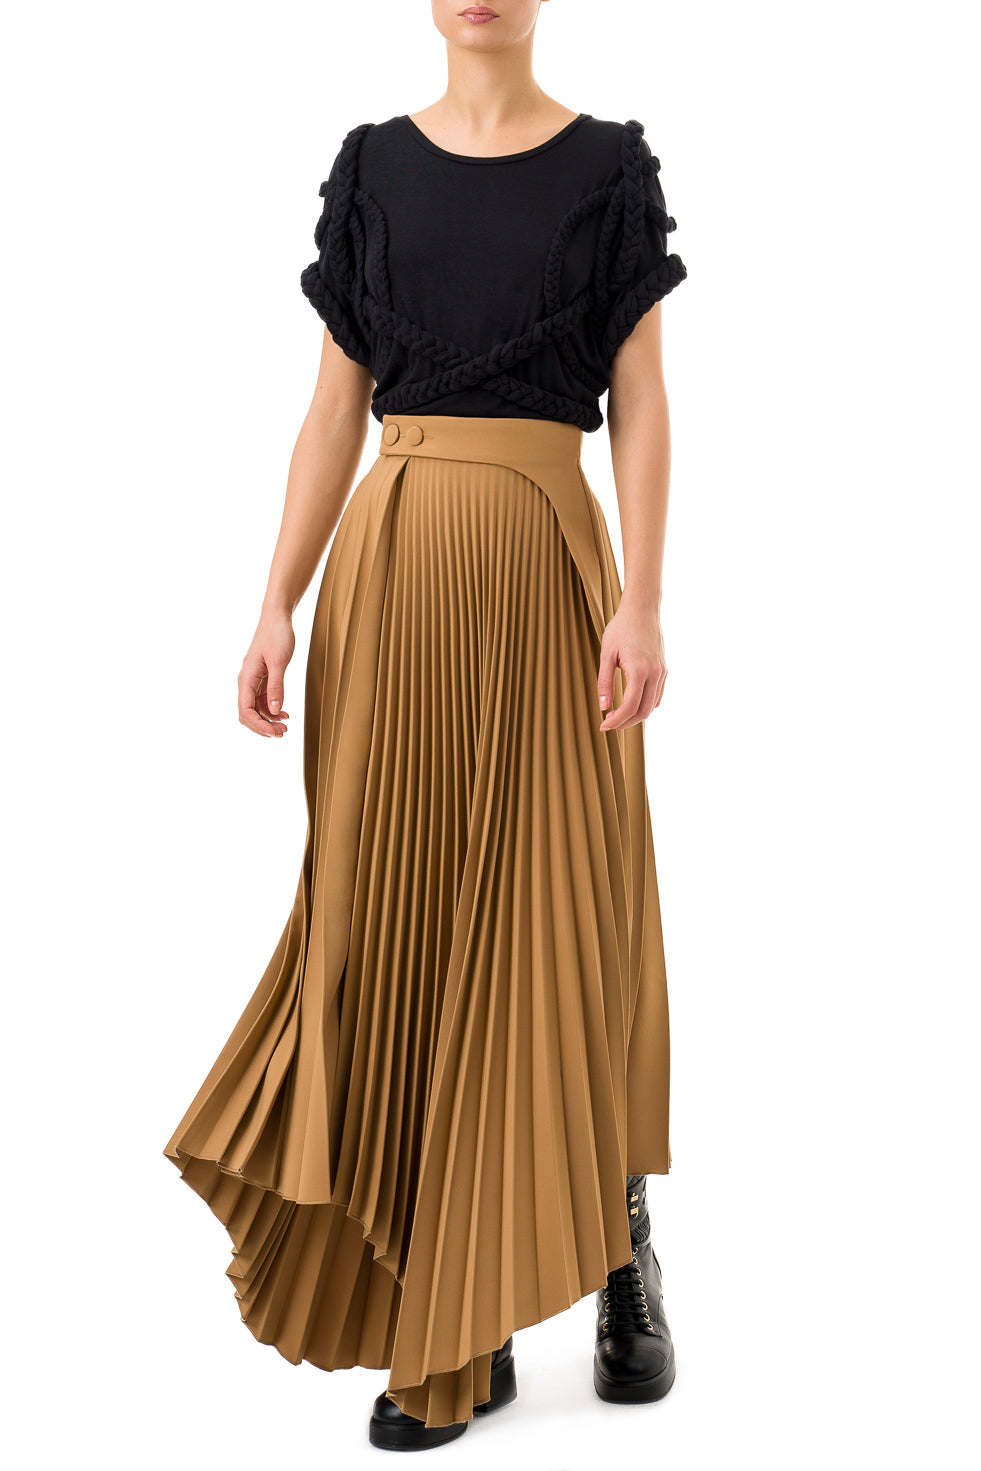 Jamila Brown Asymmetric Pleated Long Skirt